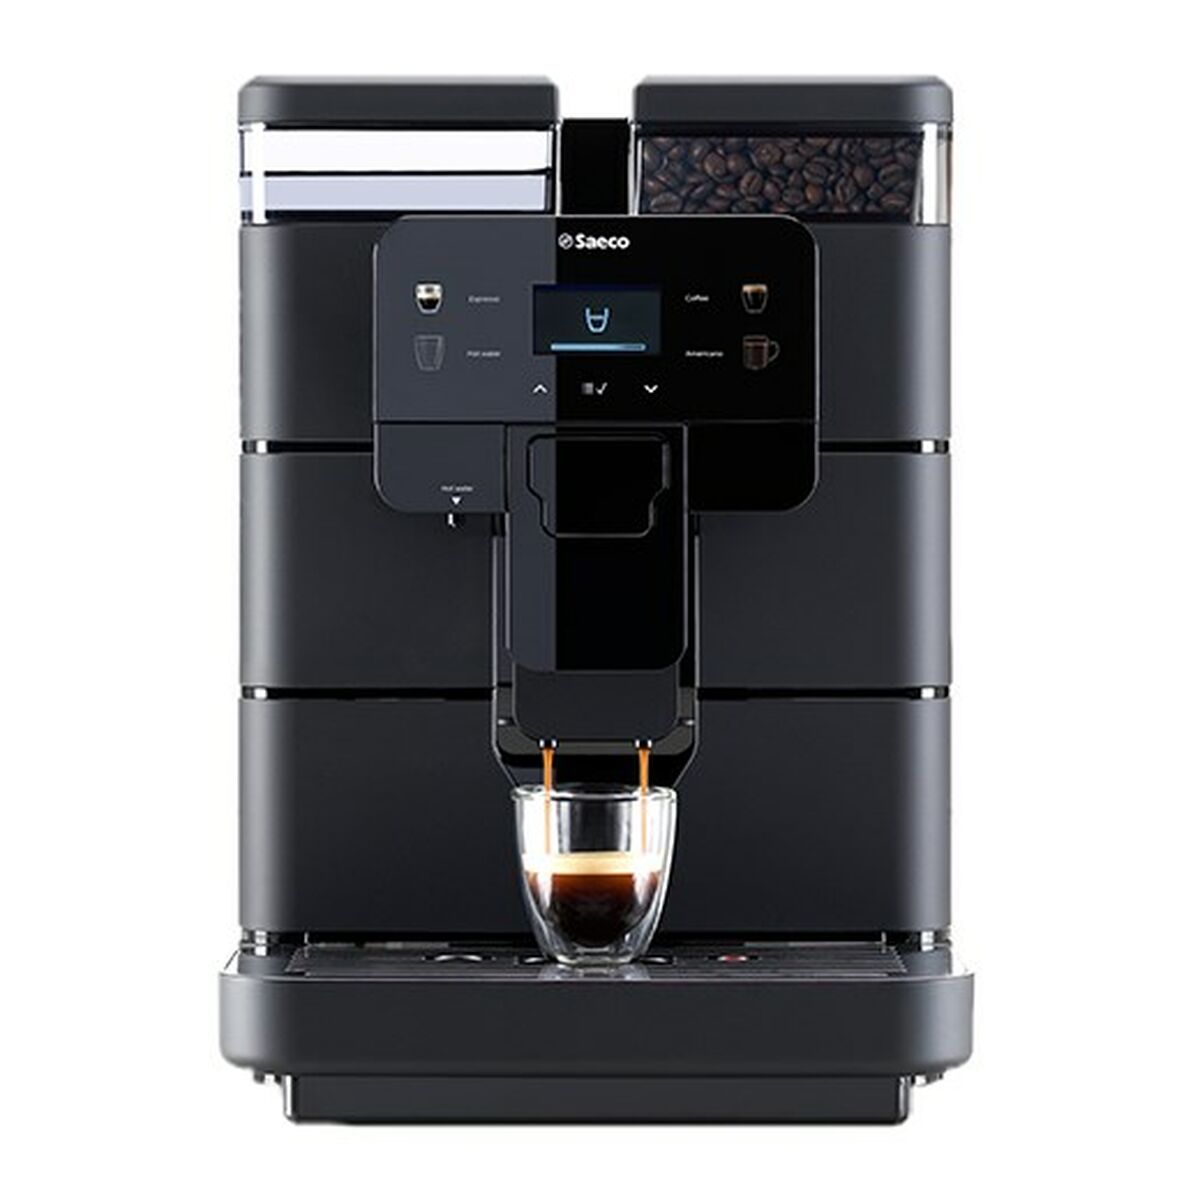 Express-Kaffeemaschine Saeco 9J0040 1400 W 2,5 L 2 Kopper